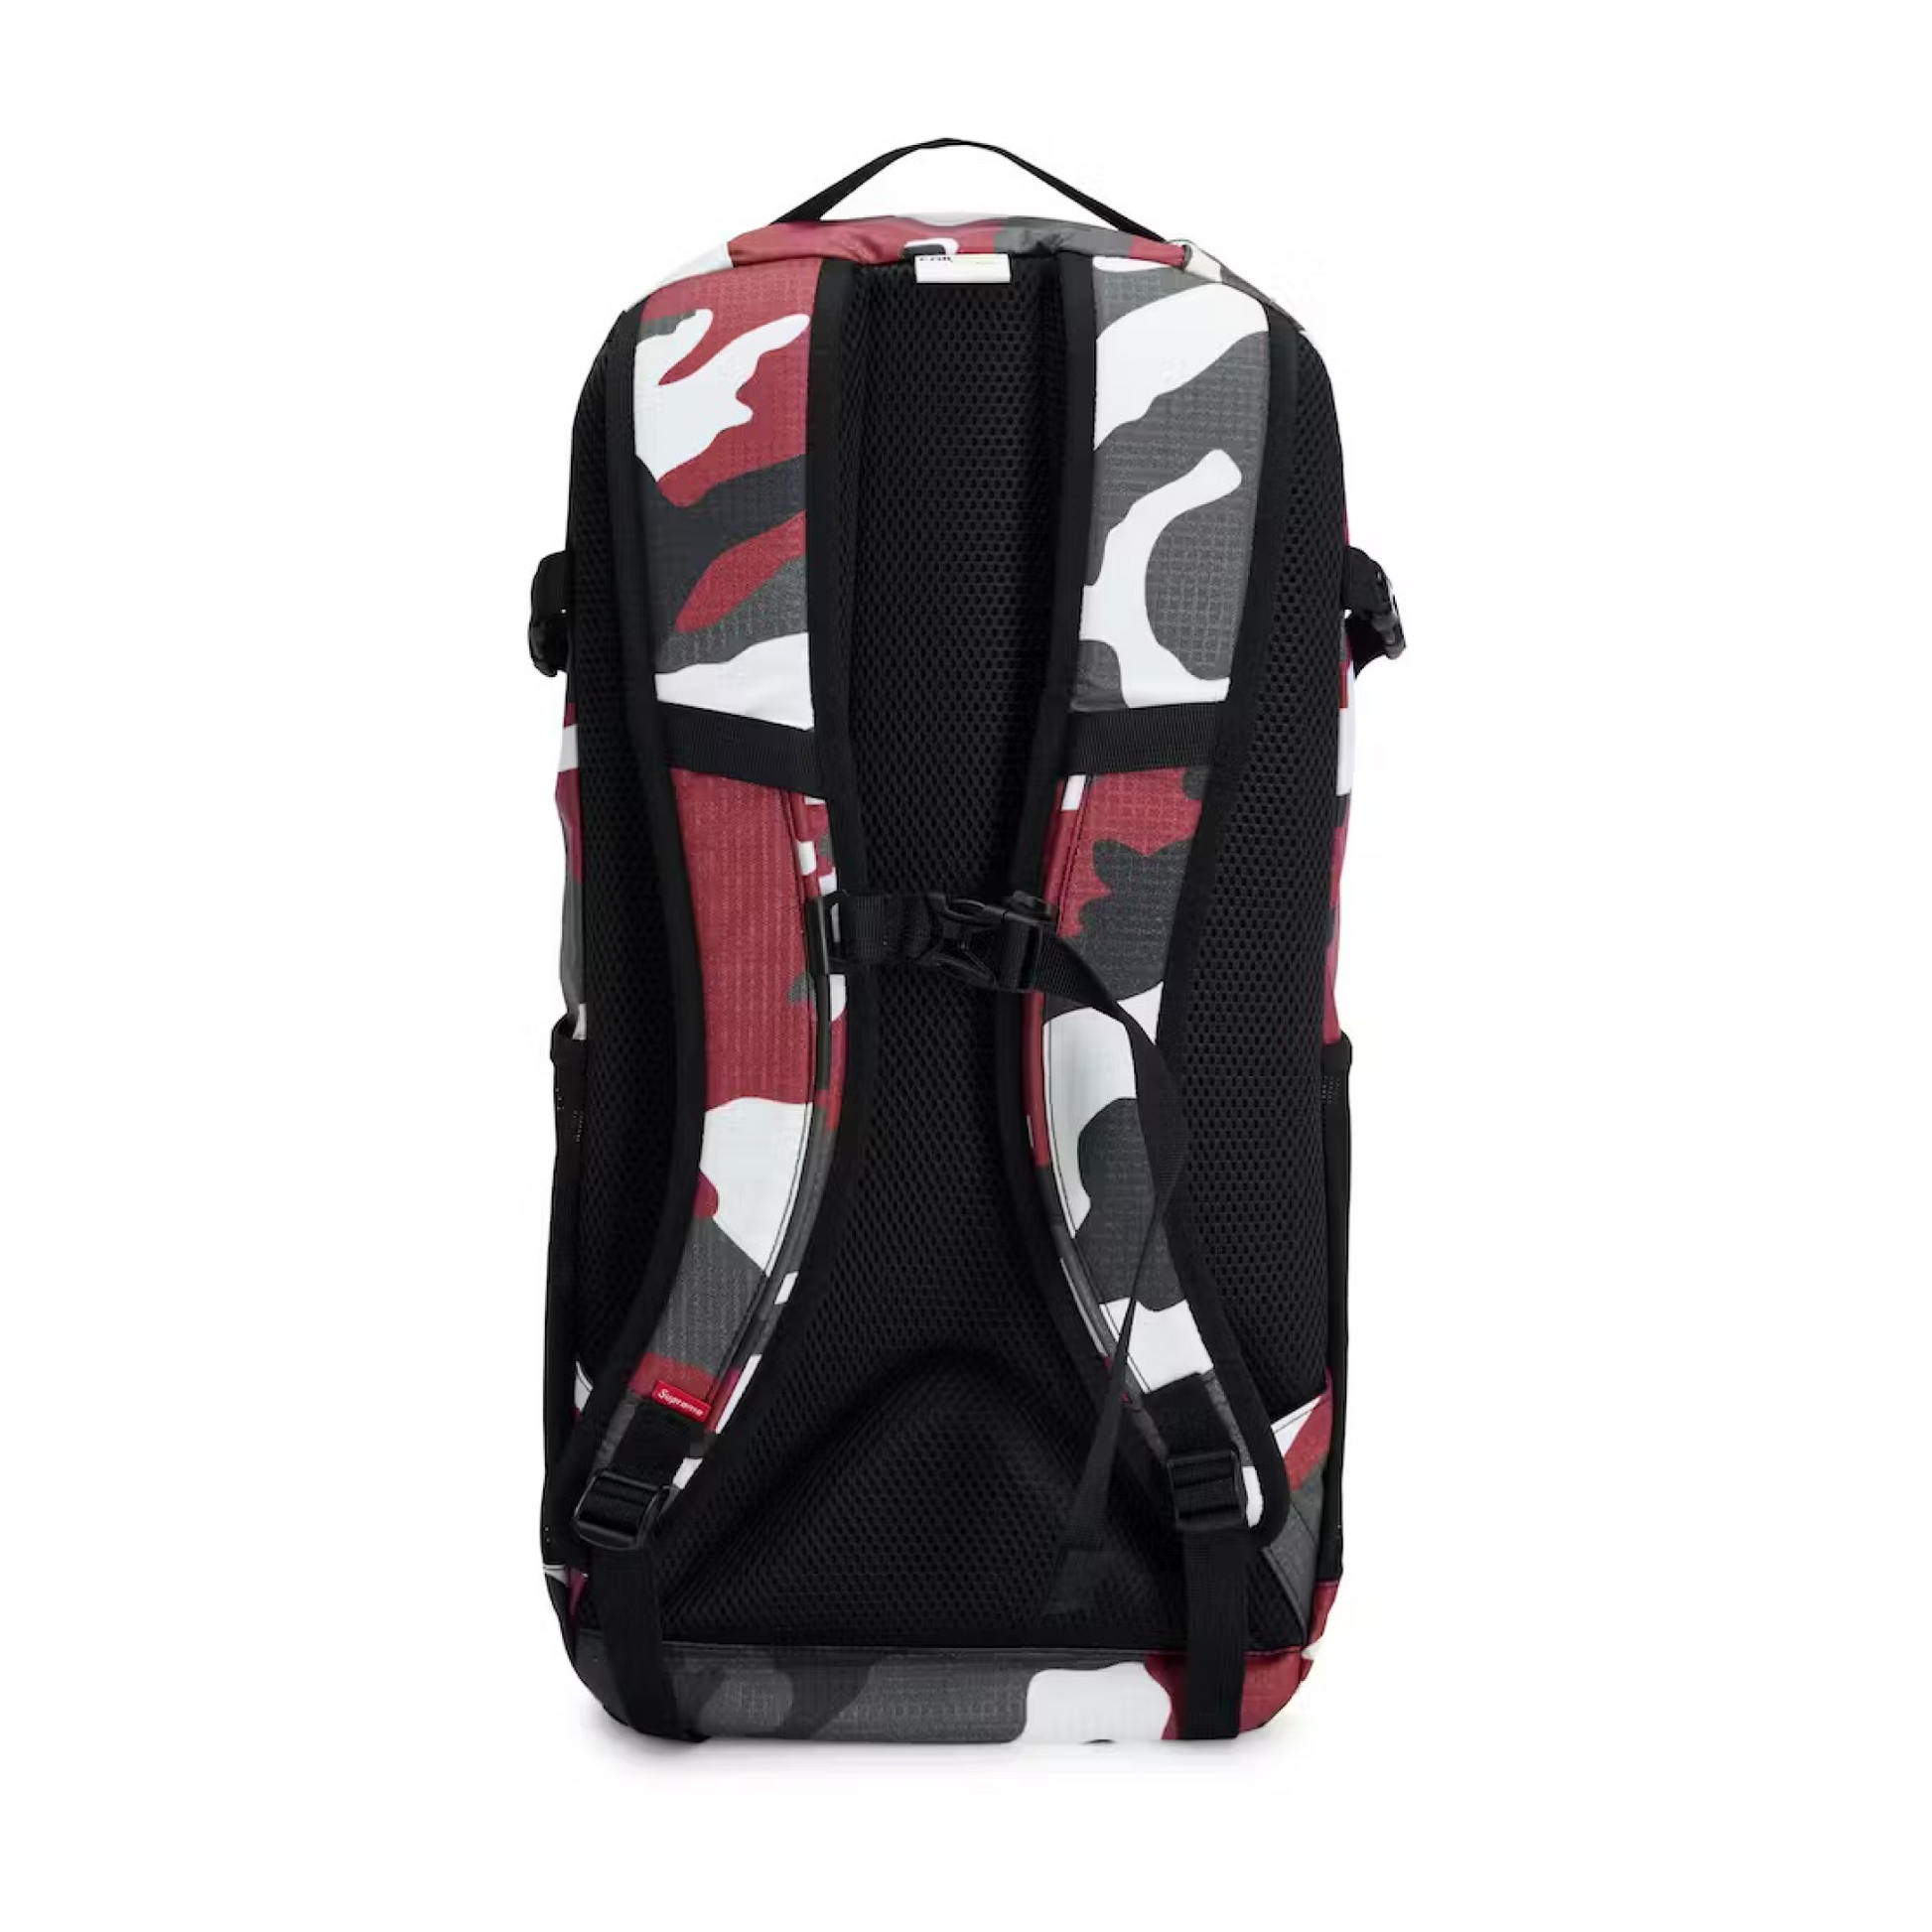 Supreme Backpack (SS21) Red Camo Supreme